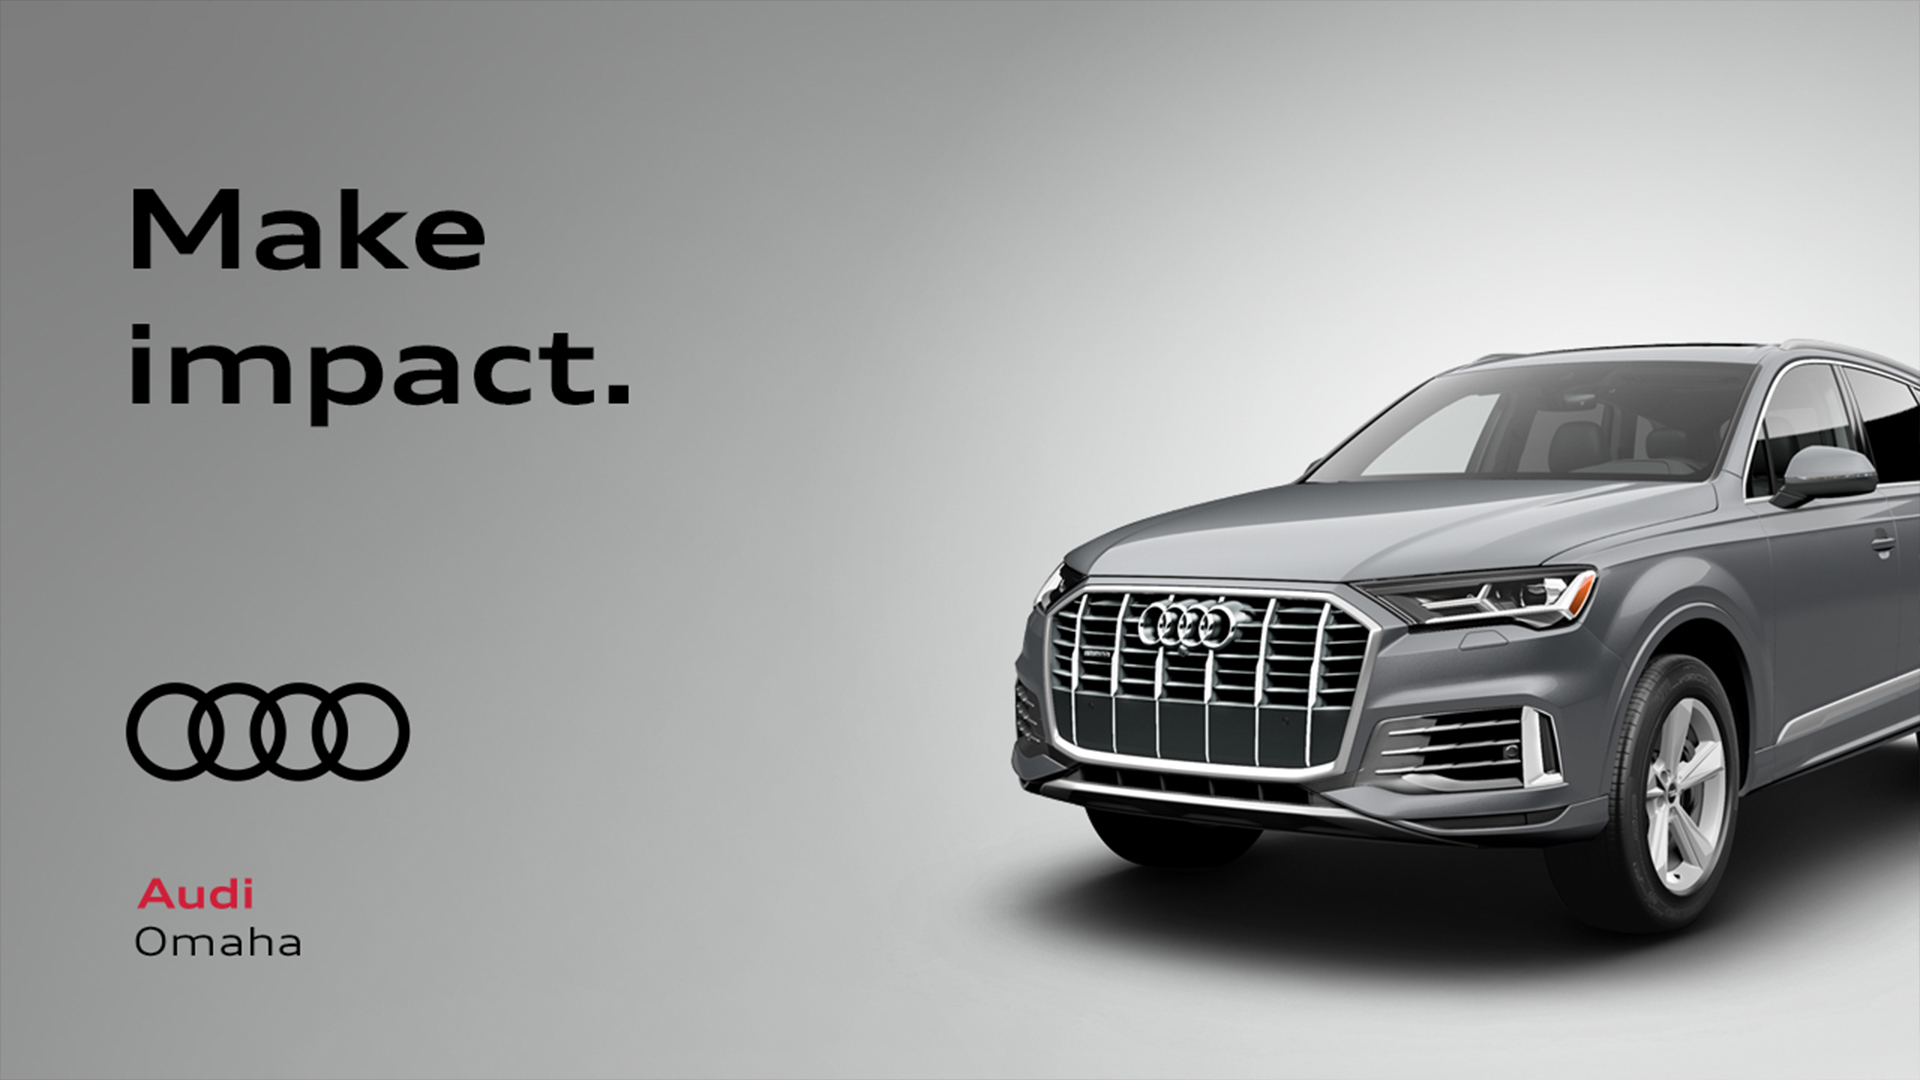 Audi Omaha Sponsorship: Advertisement #4